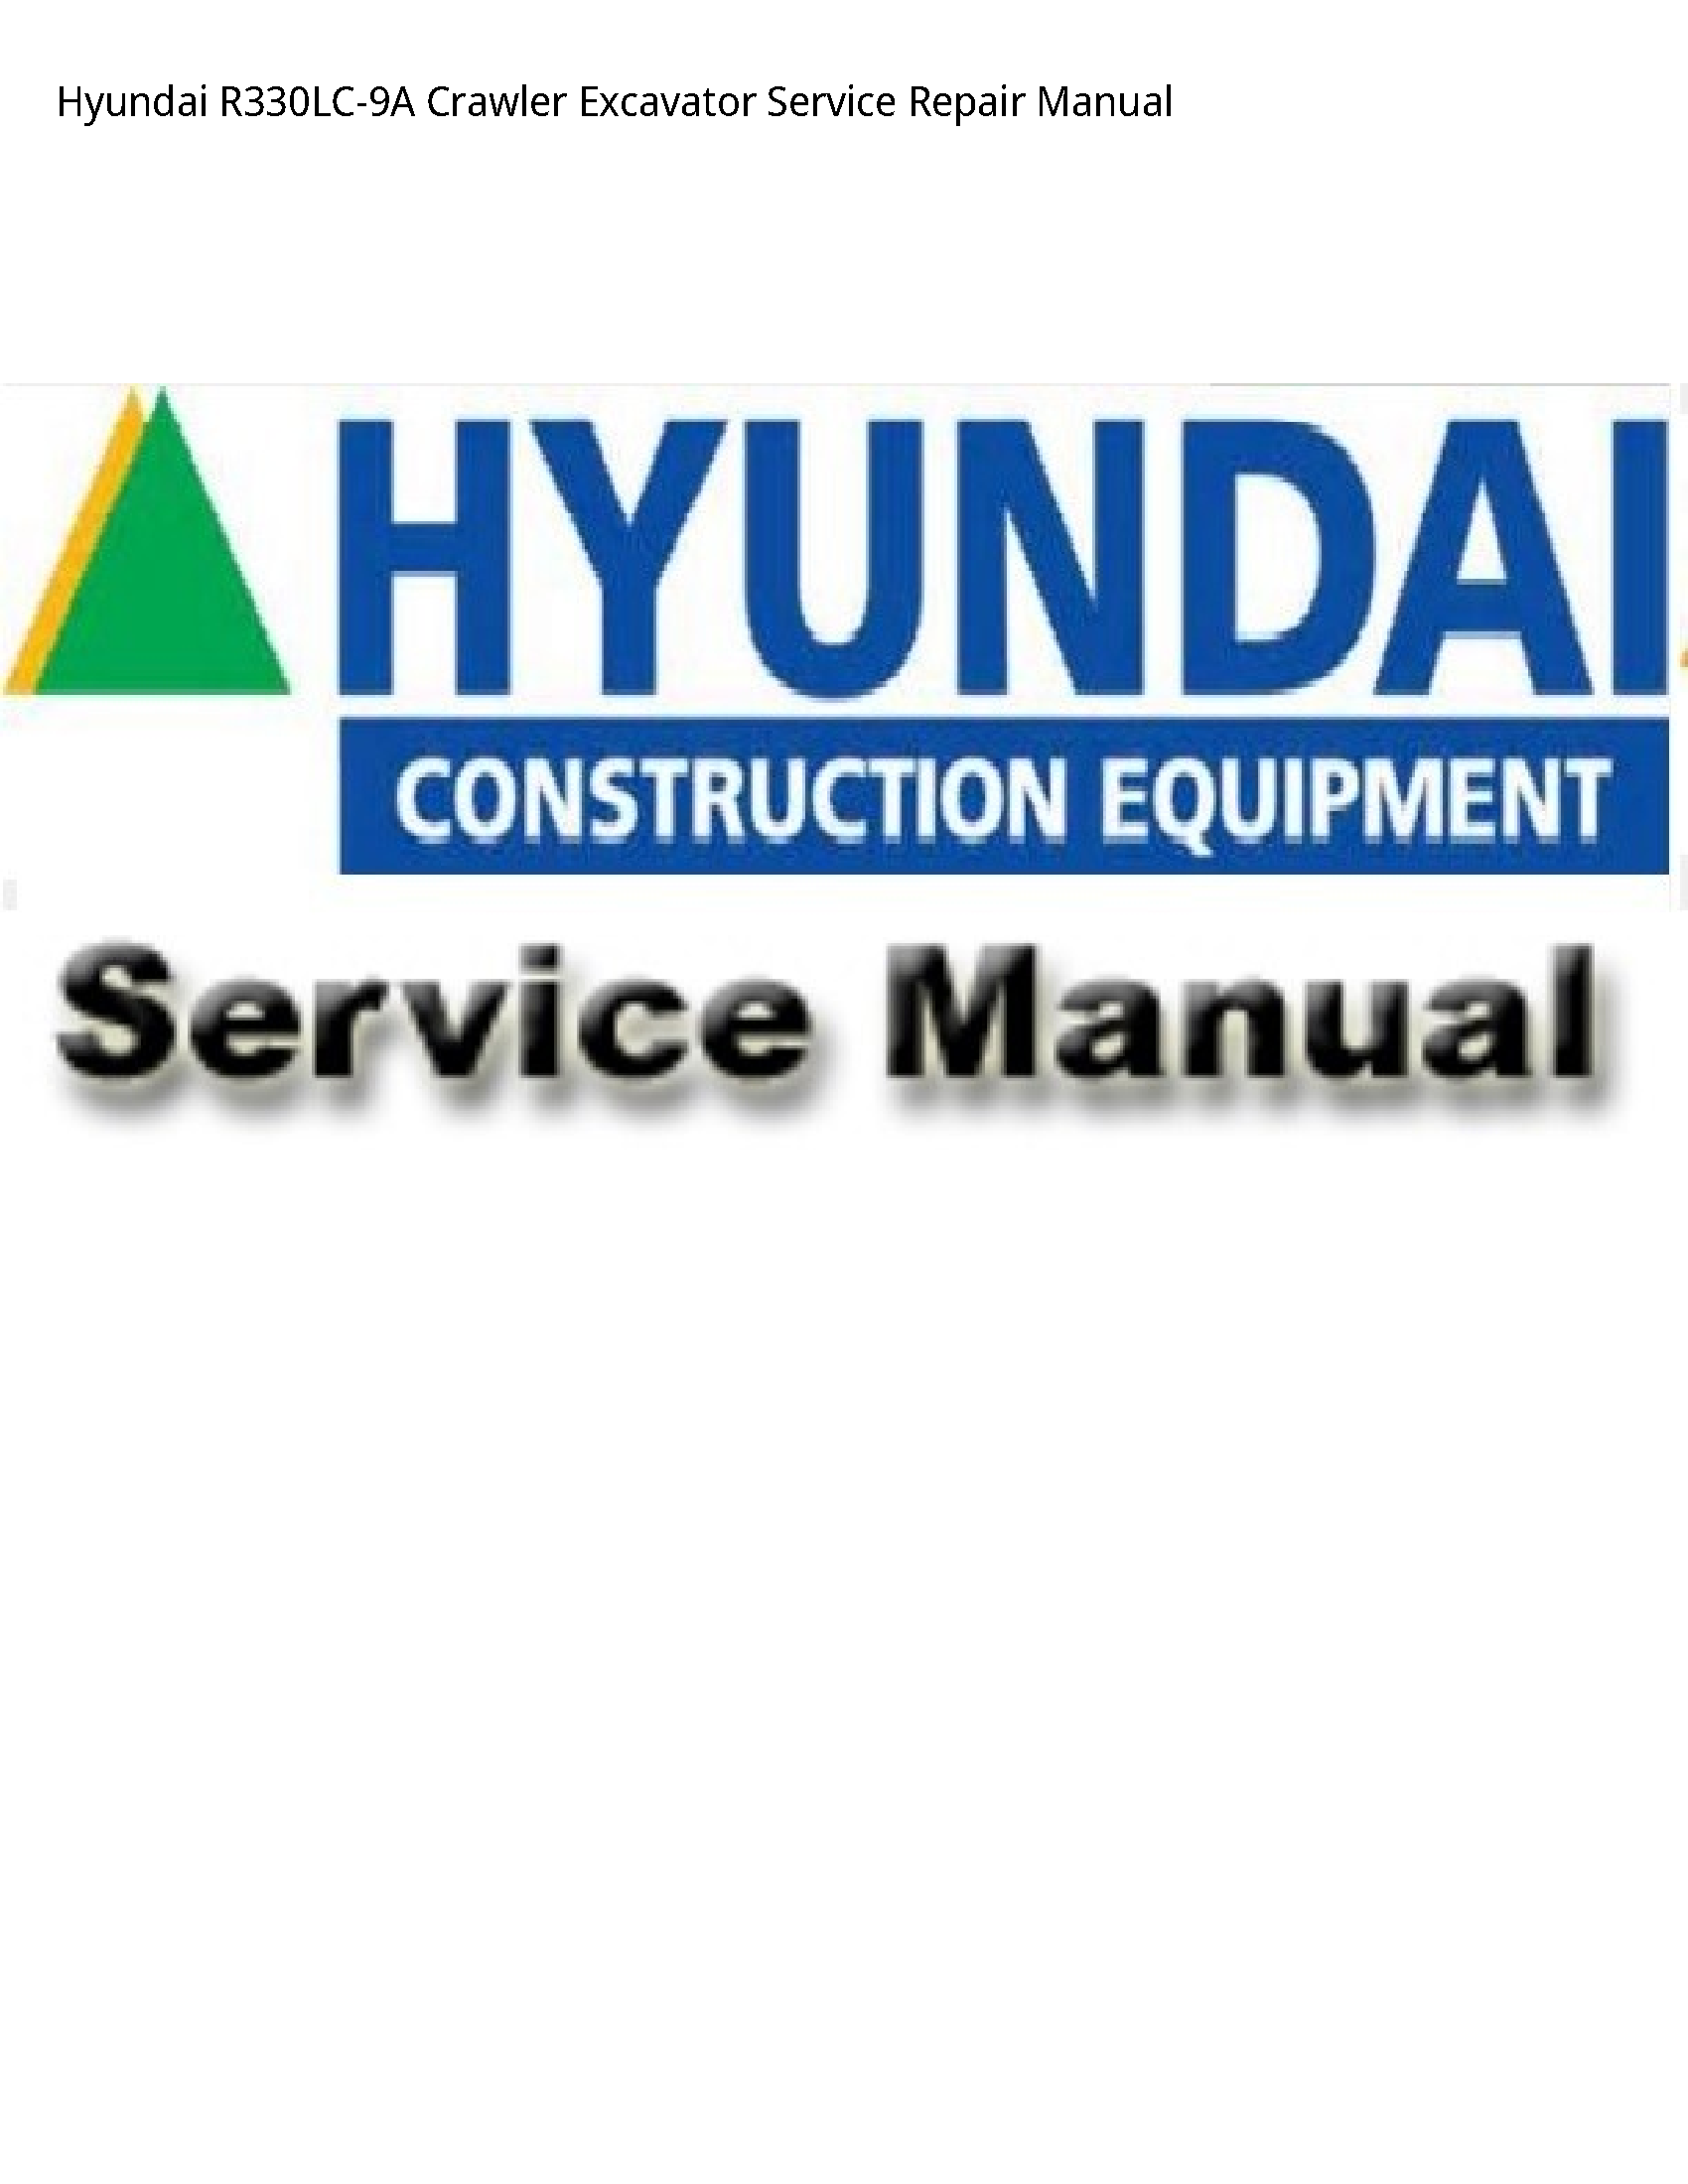 Hyundai R330LC-9A Crawler Excavator manual